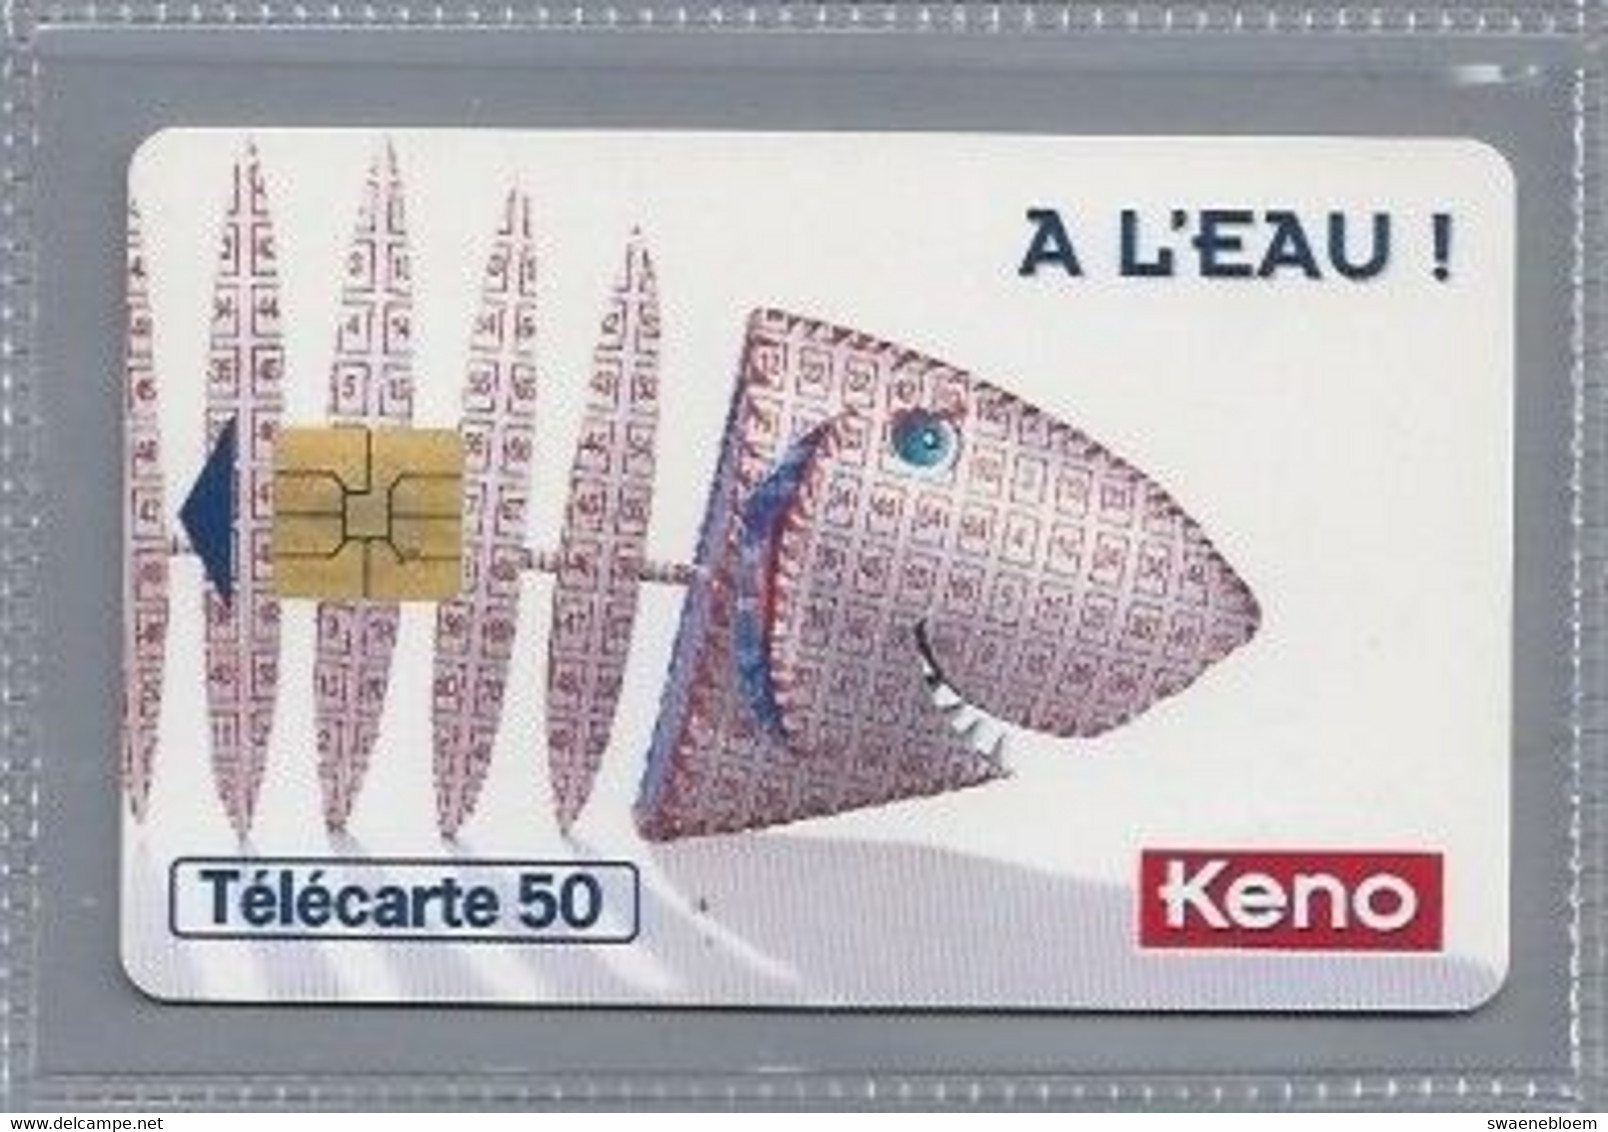 FR.- France Telecom. Télécarte. KENO. A L'EAU !.   50 Unités - Games